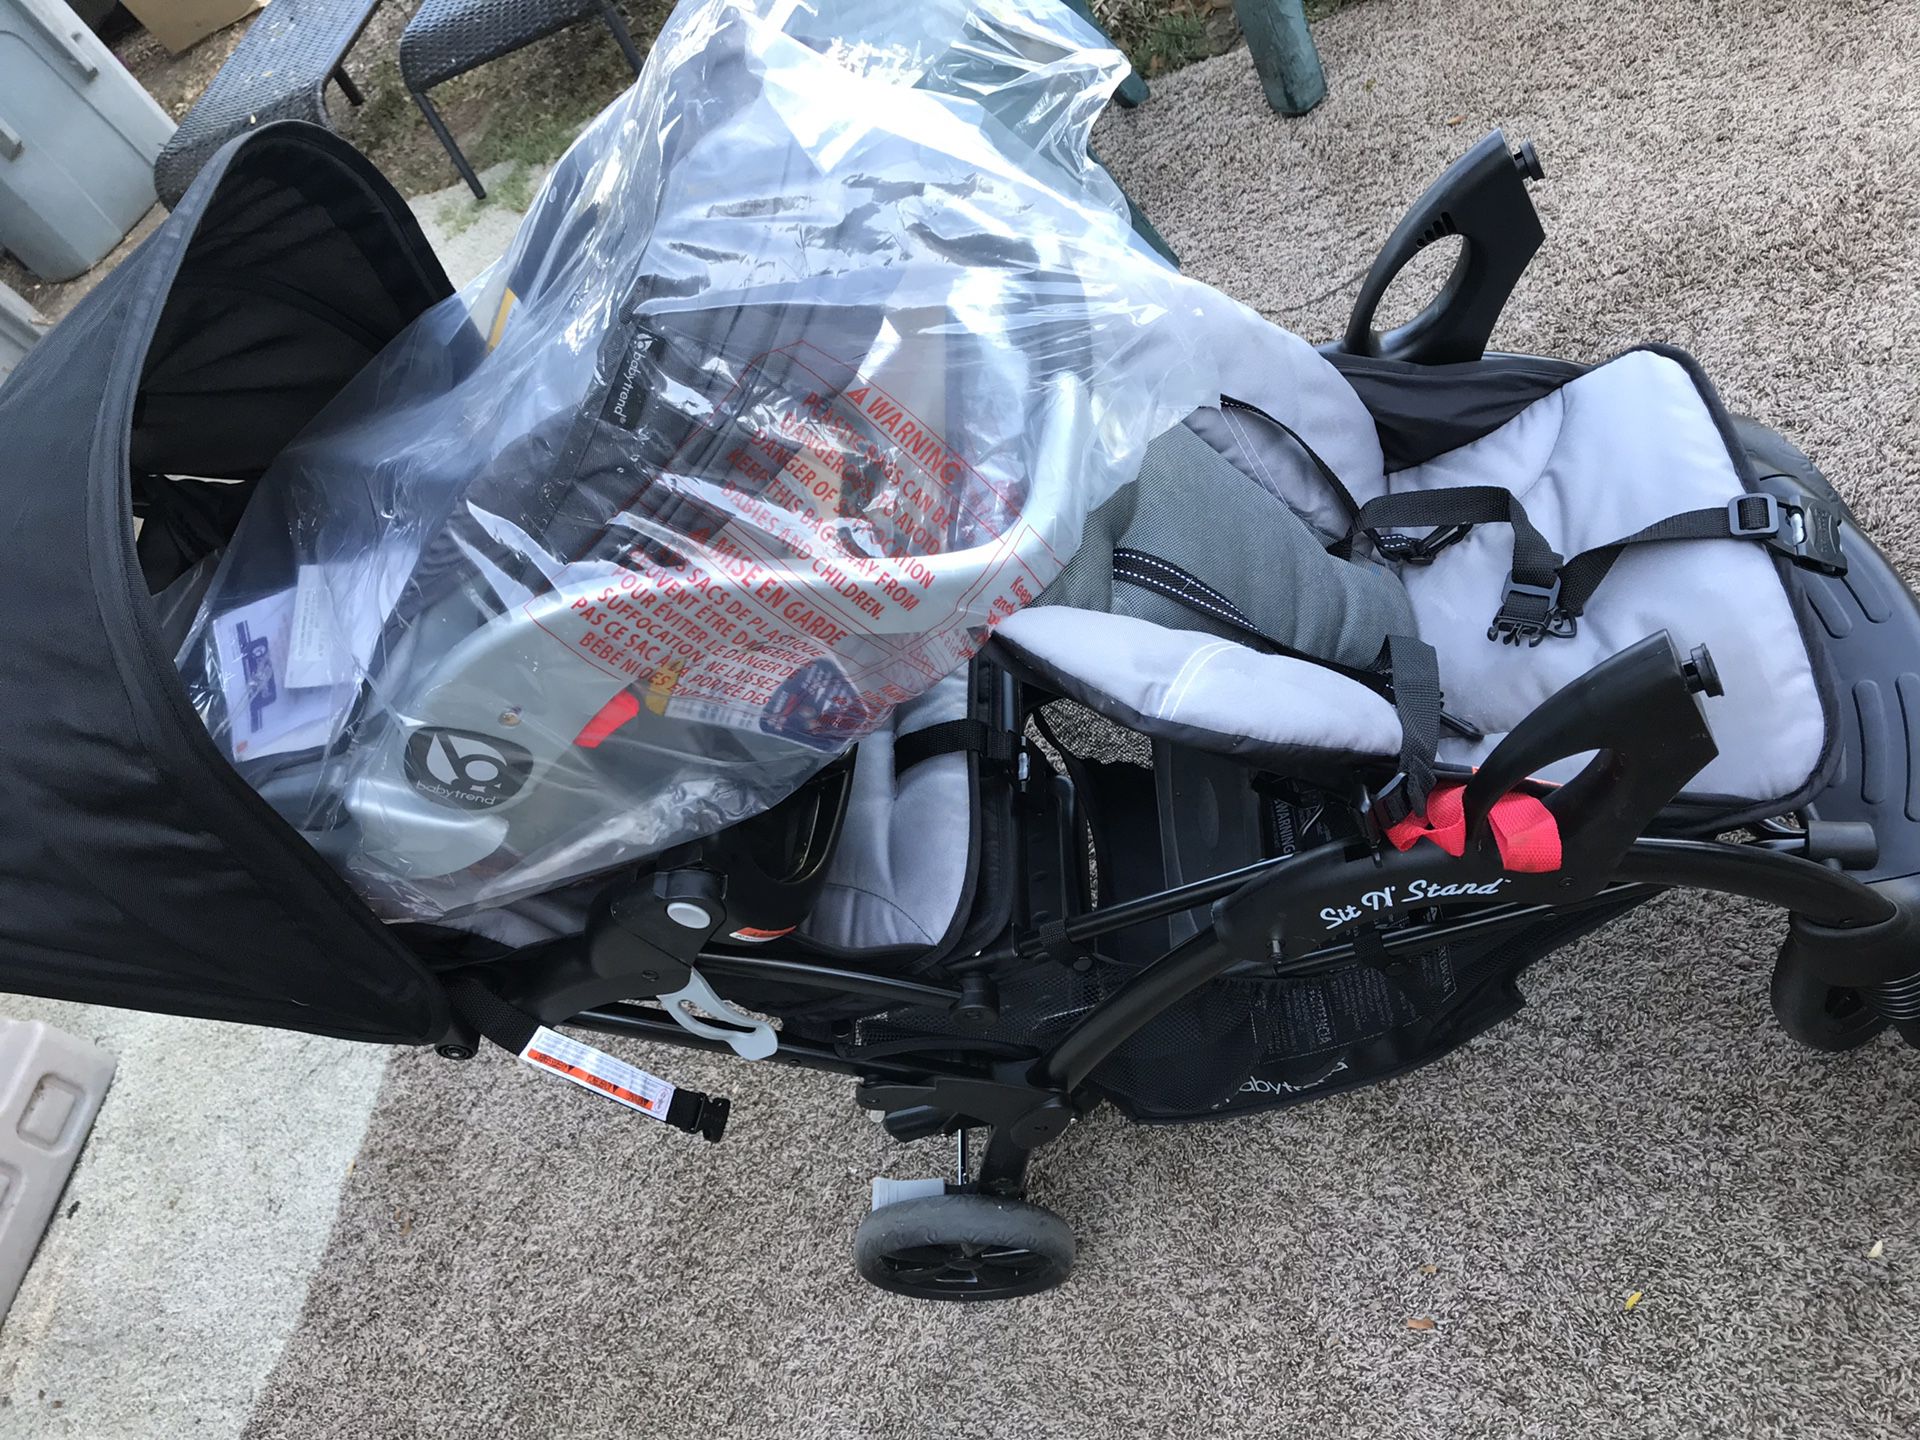 Baby Trend stroller